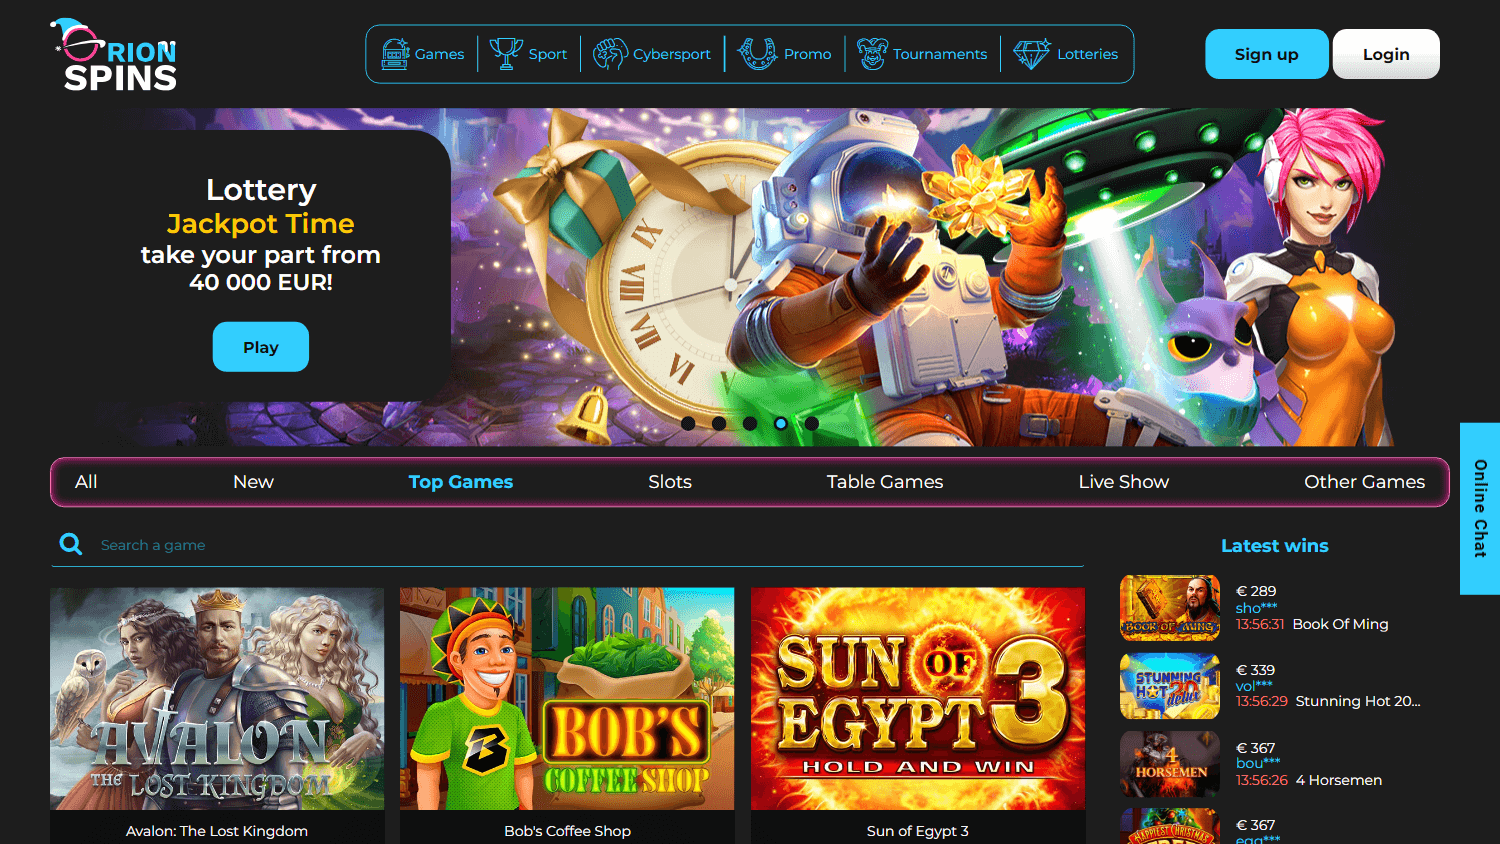 orion_spins_casino_homepage_desktop